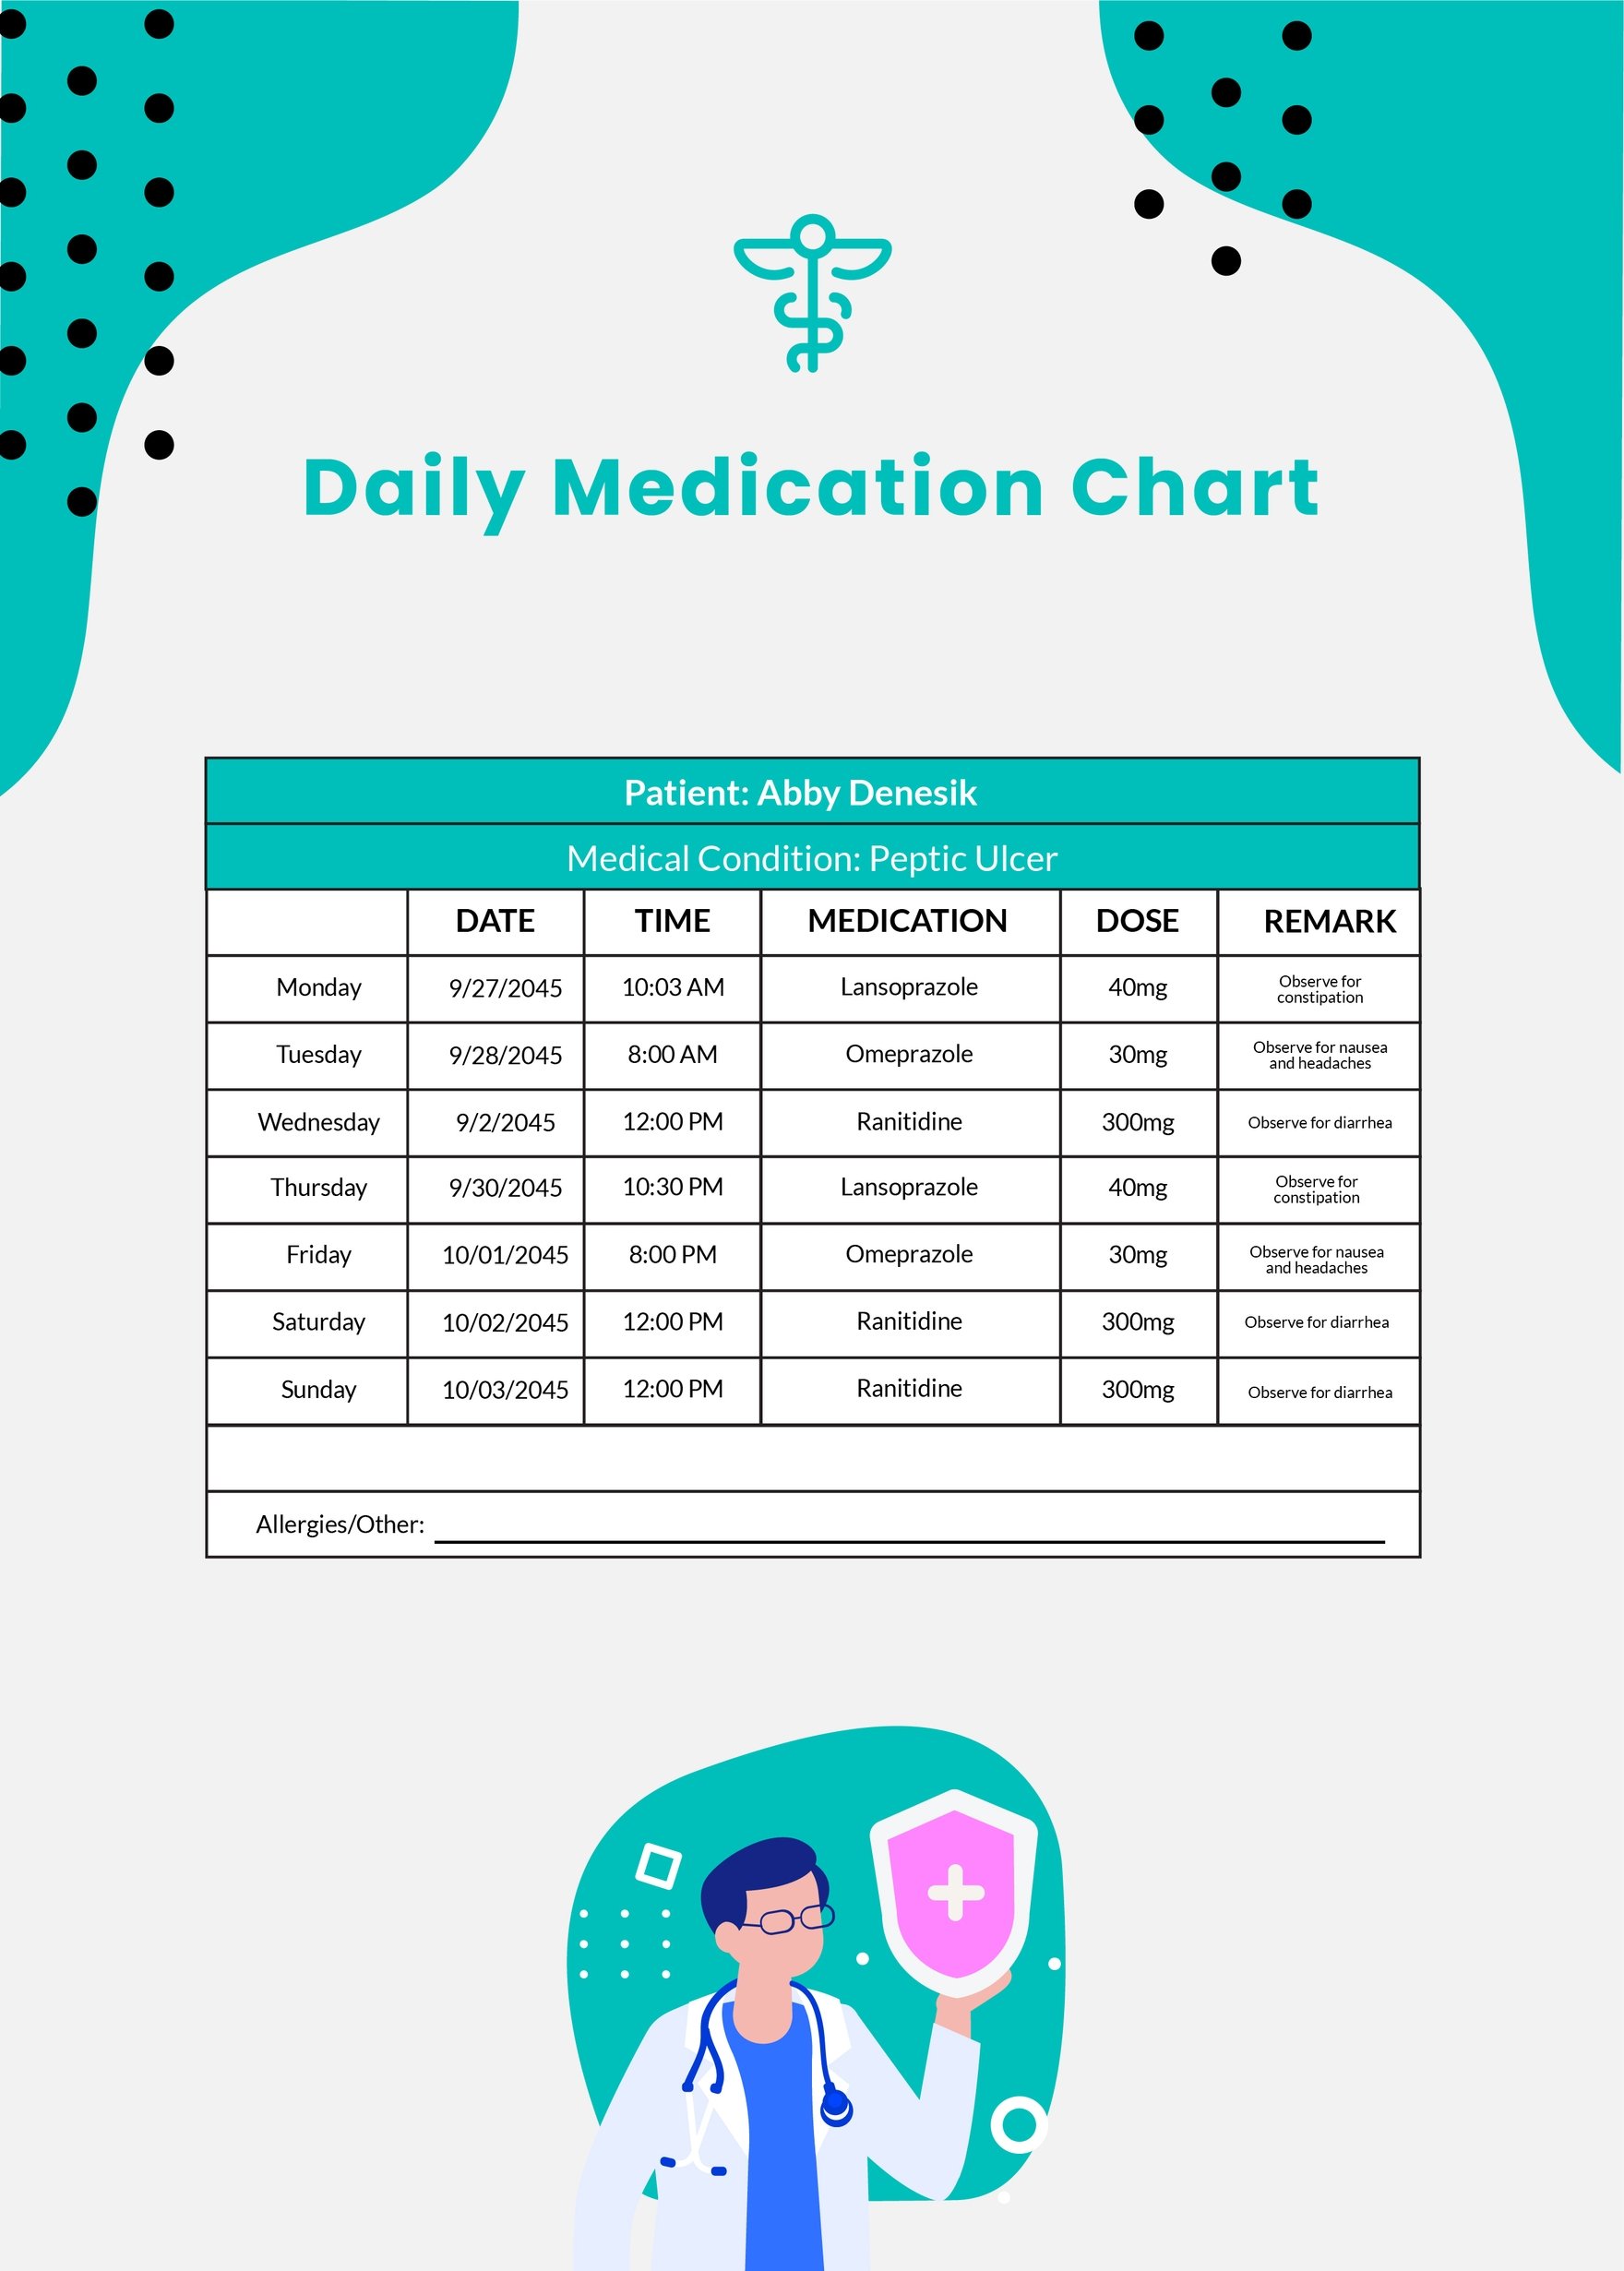 Daily Medication Chart